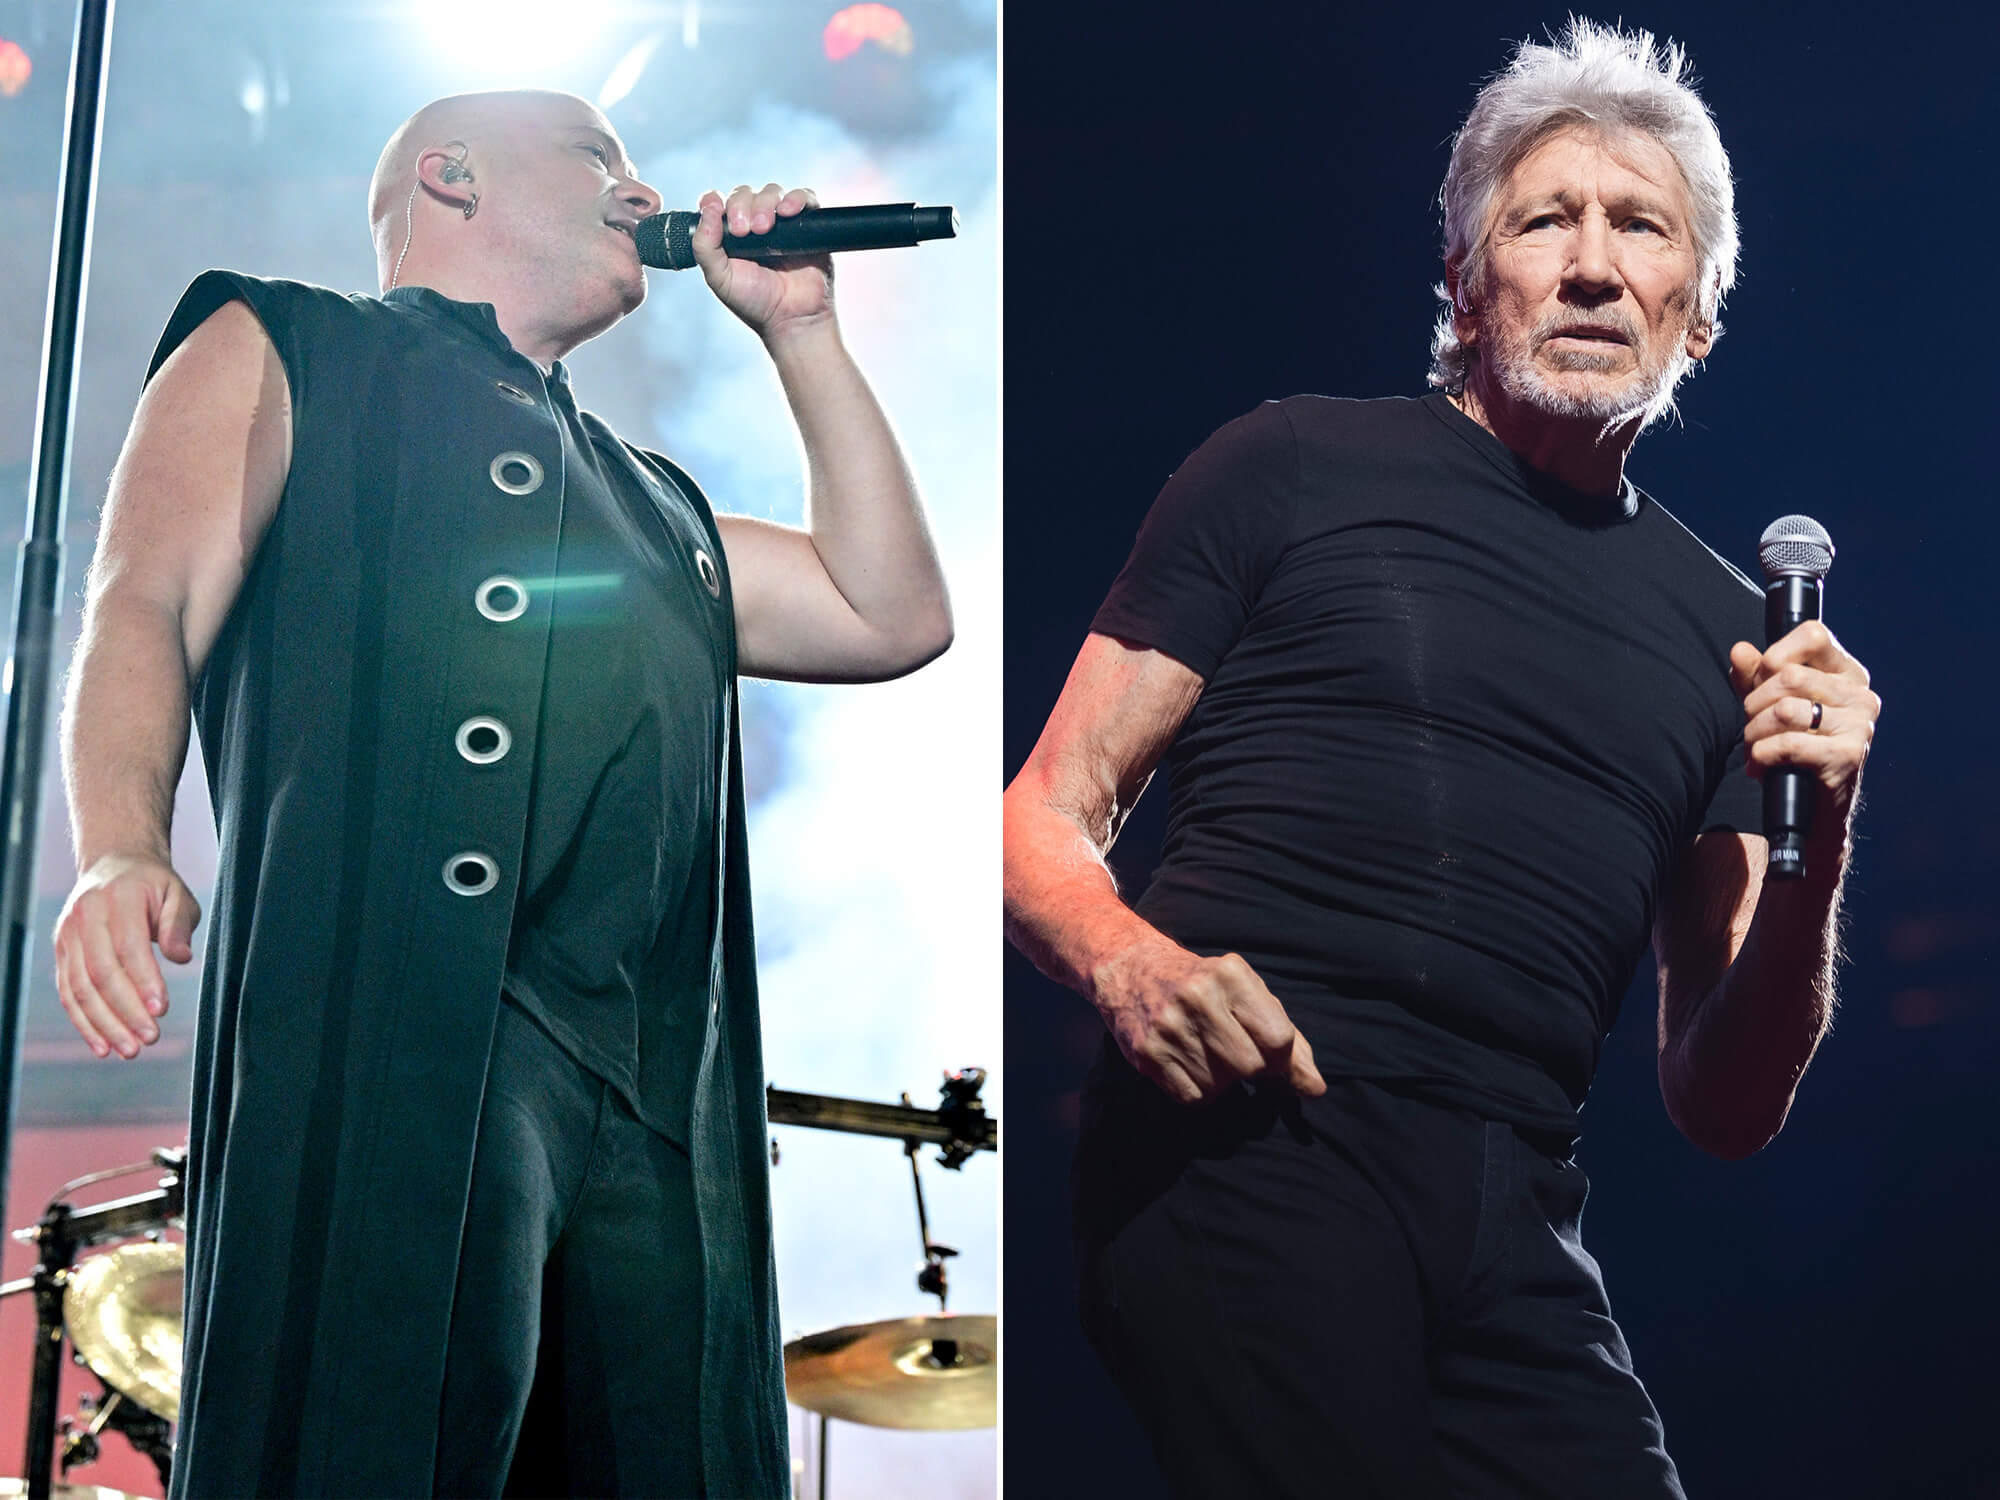 [L-R] David Draiman and Roger Waters